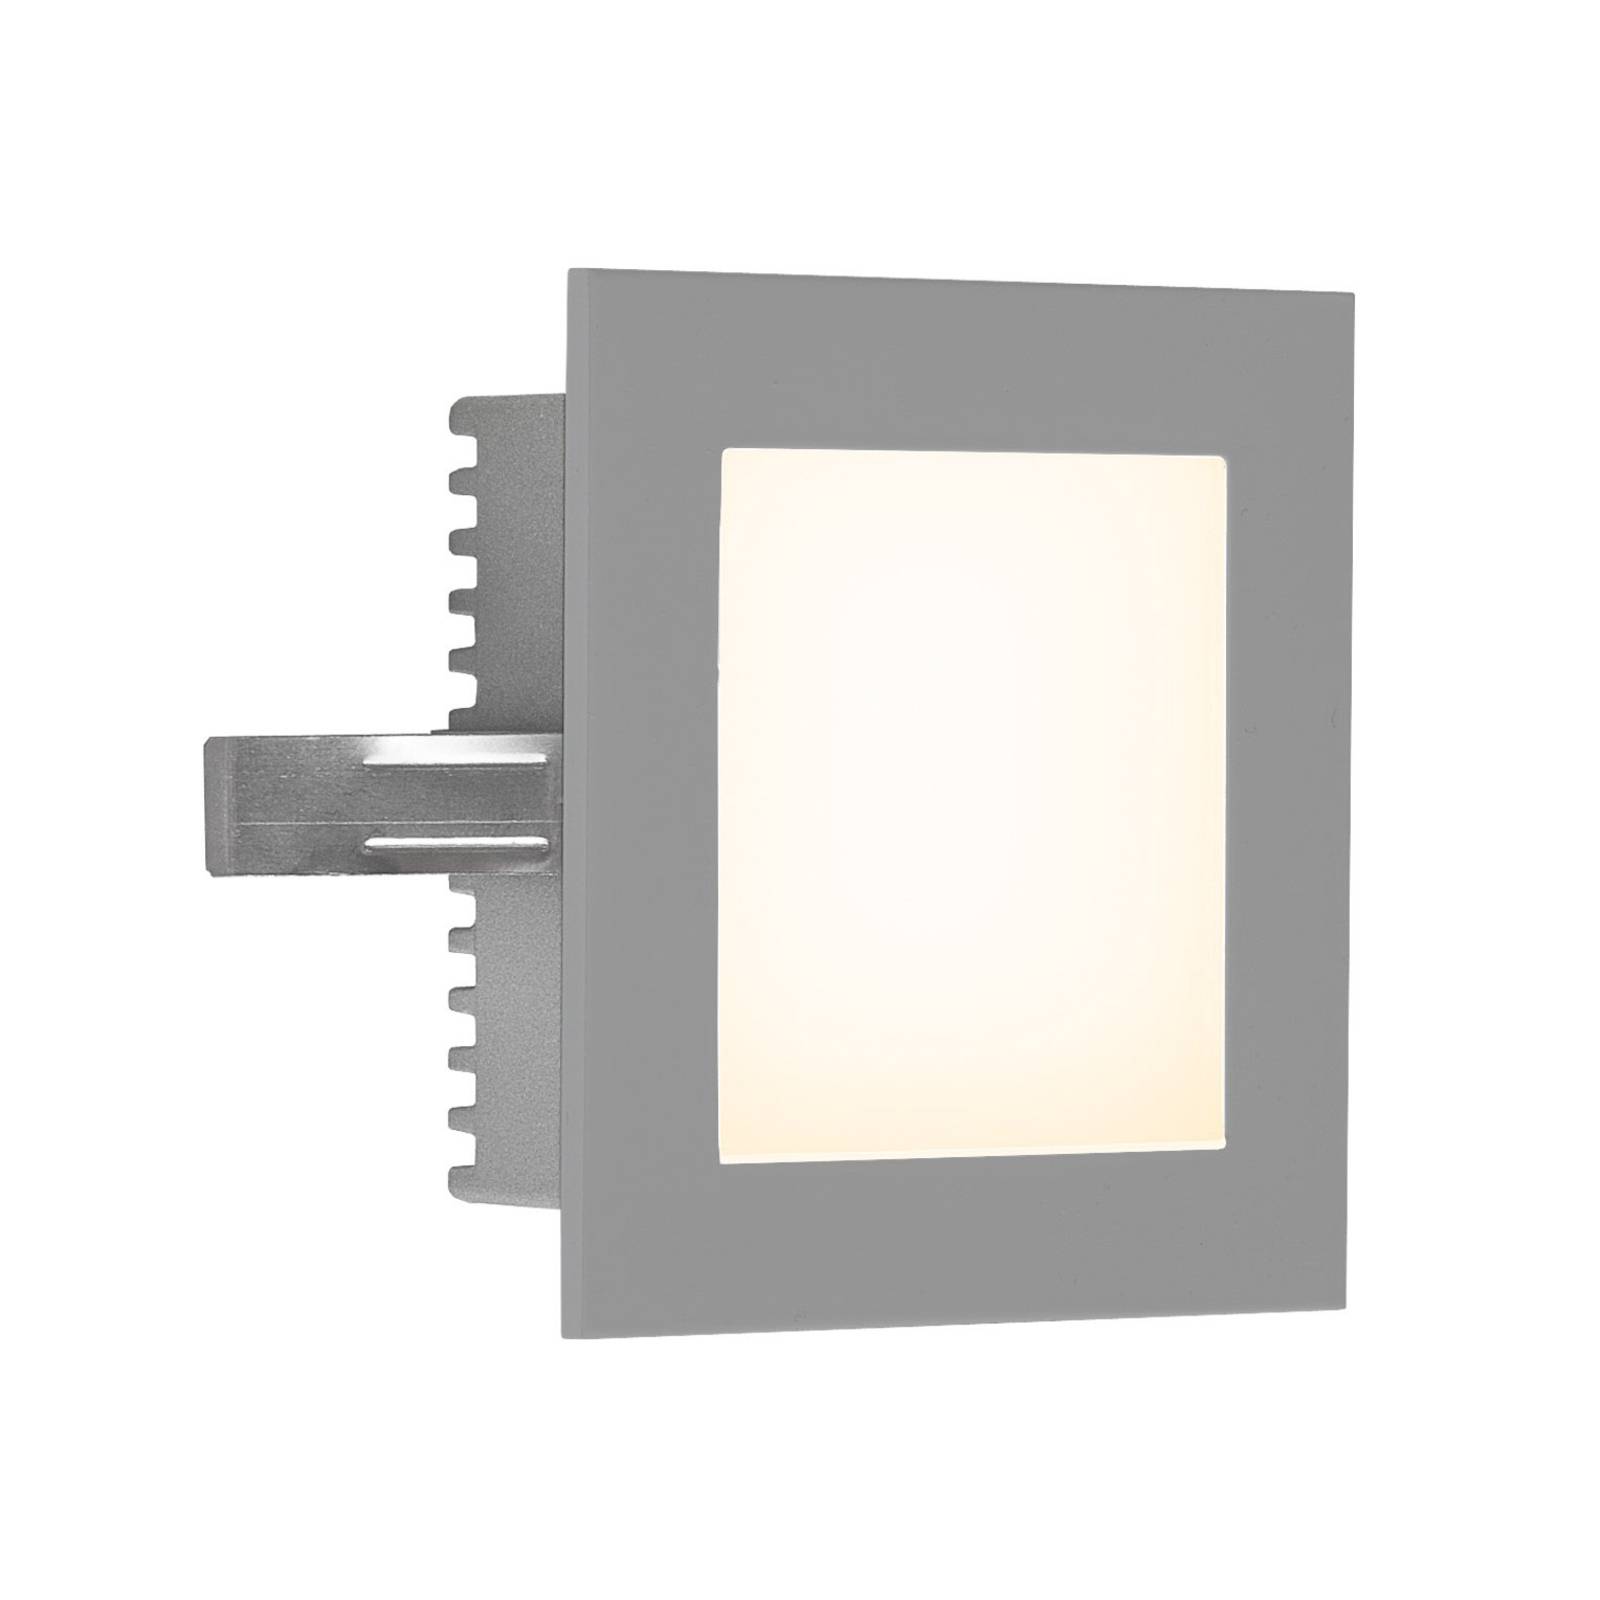 EVN P2180 LED-vägginbyggnadslampa 3 000 K silver